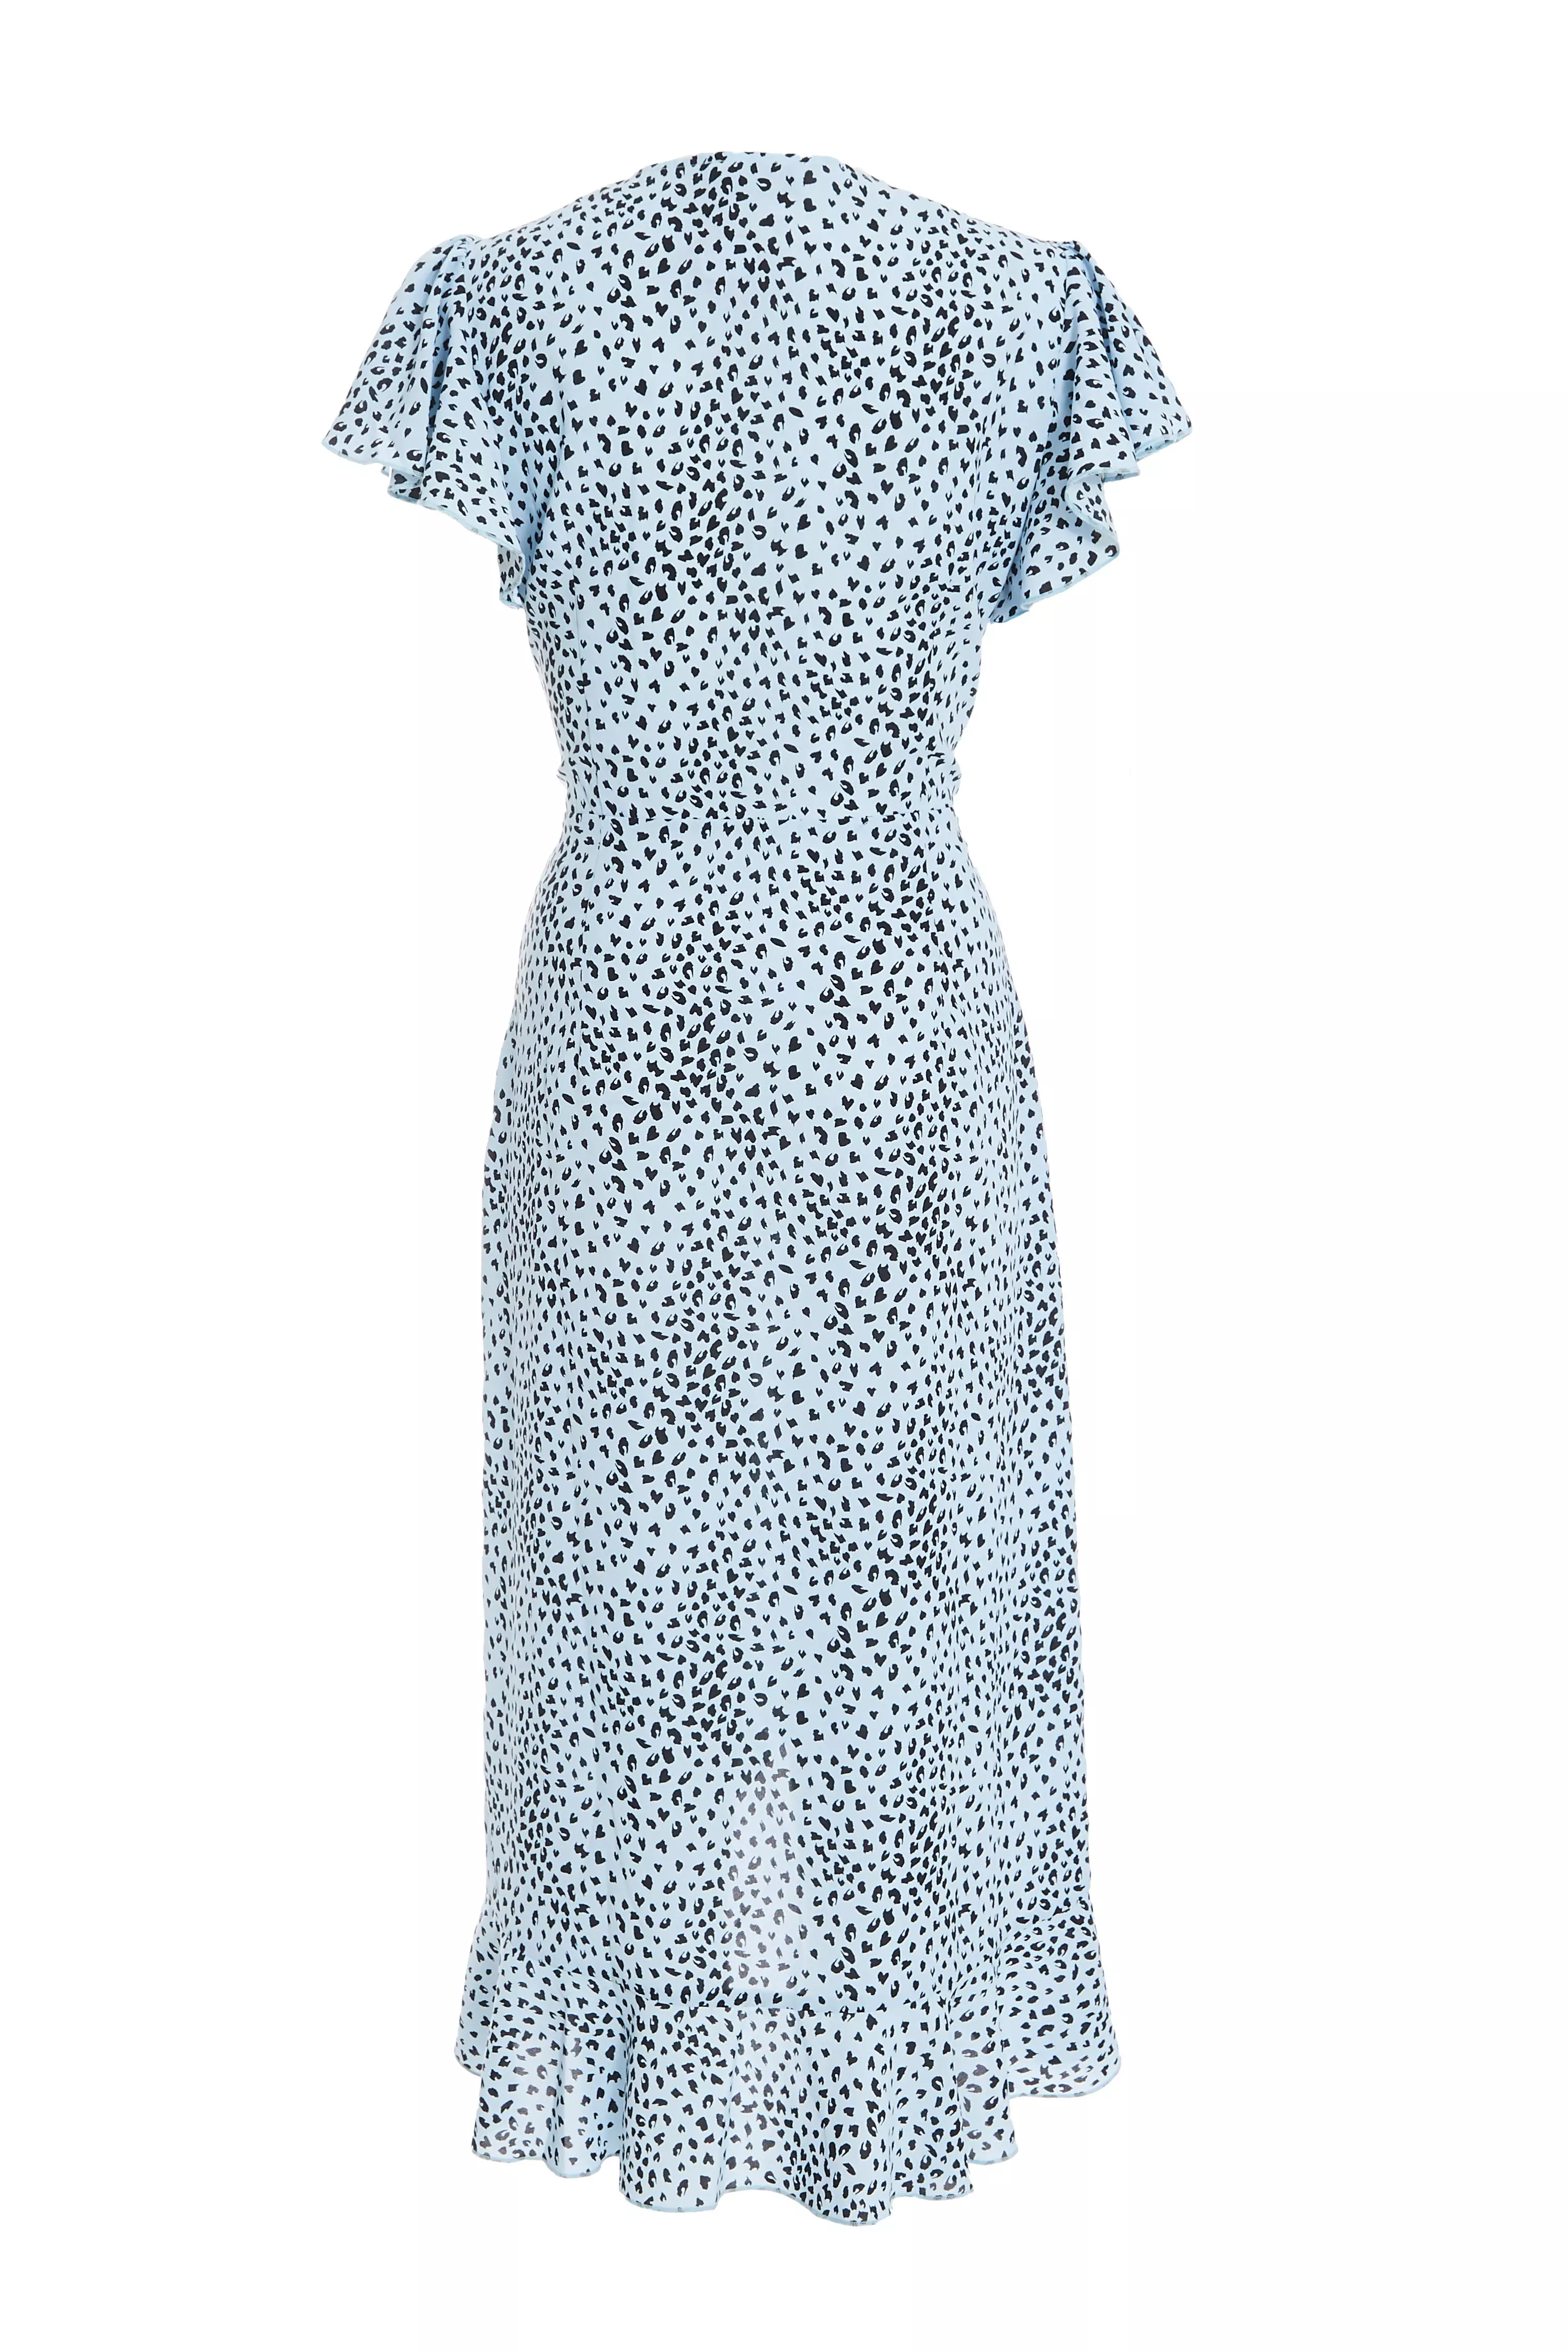 Blue Animal Print Frill Sleeve Midi Dress